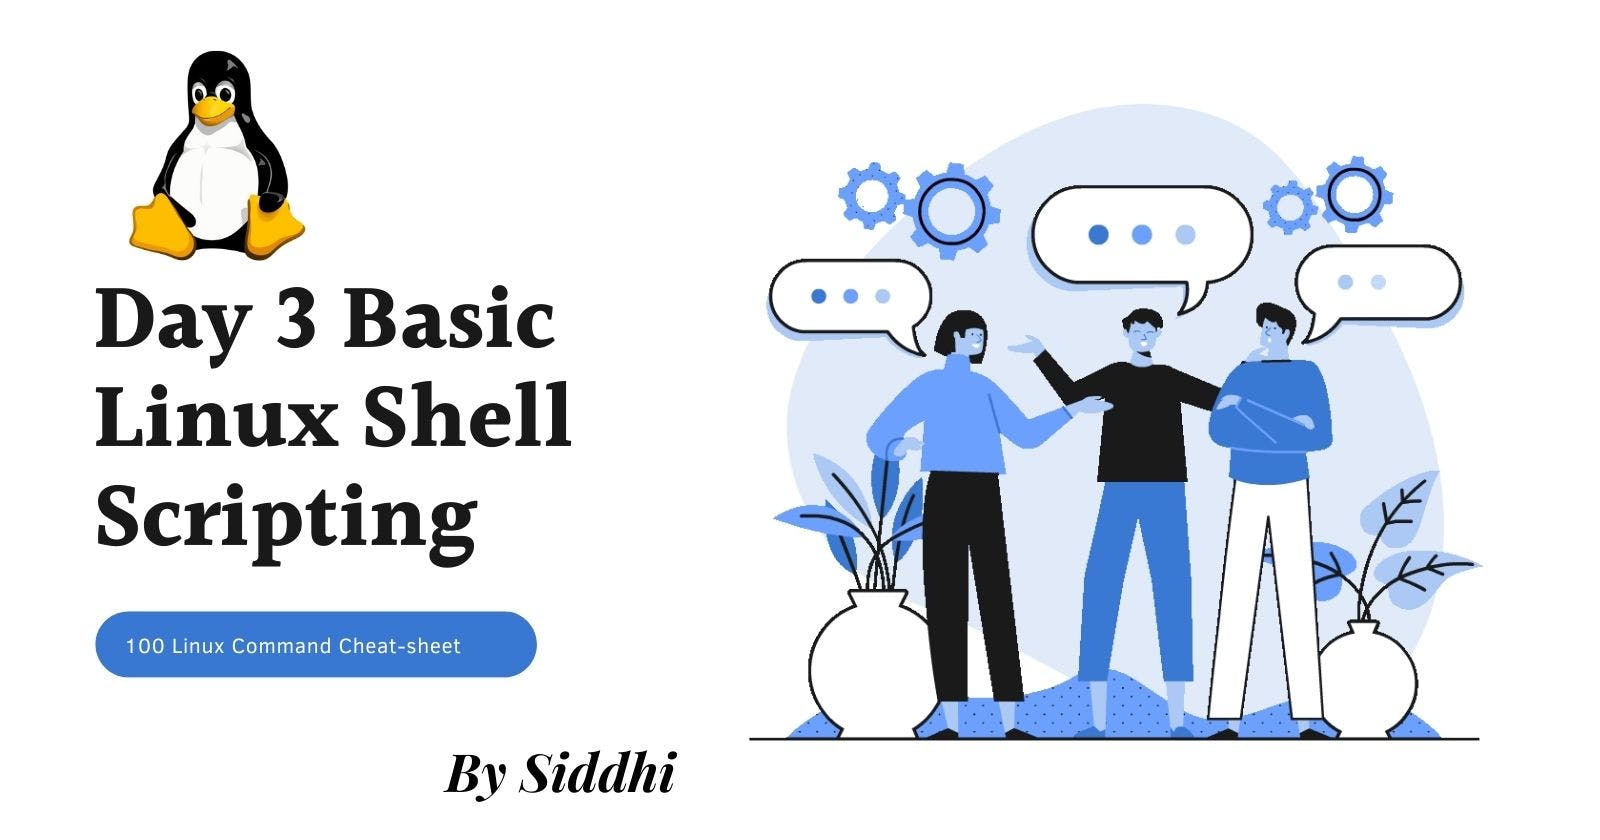 Day 3 Task: Basic Linux Shell Scripting for DevOps Engineers.